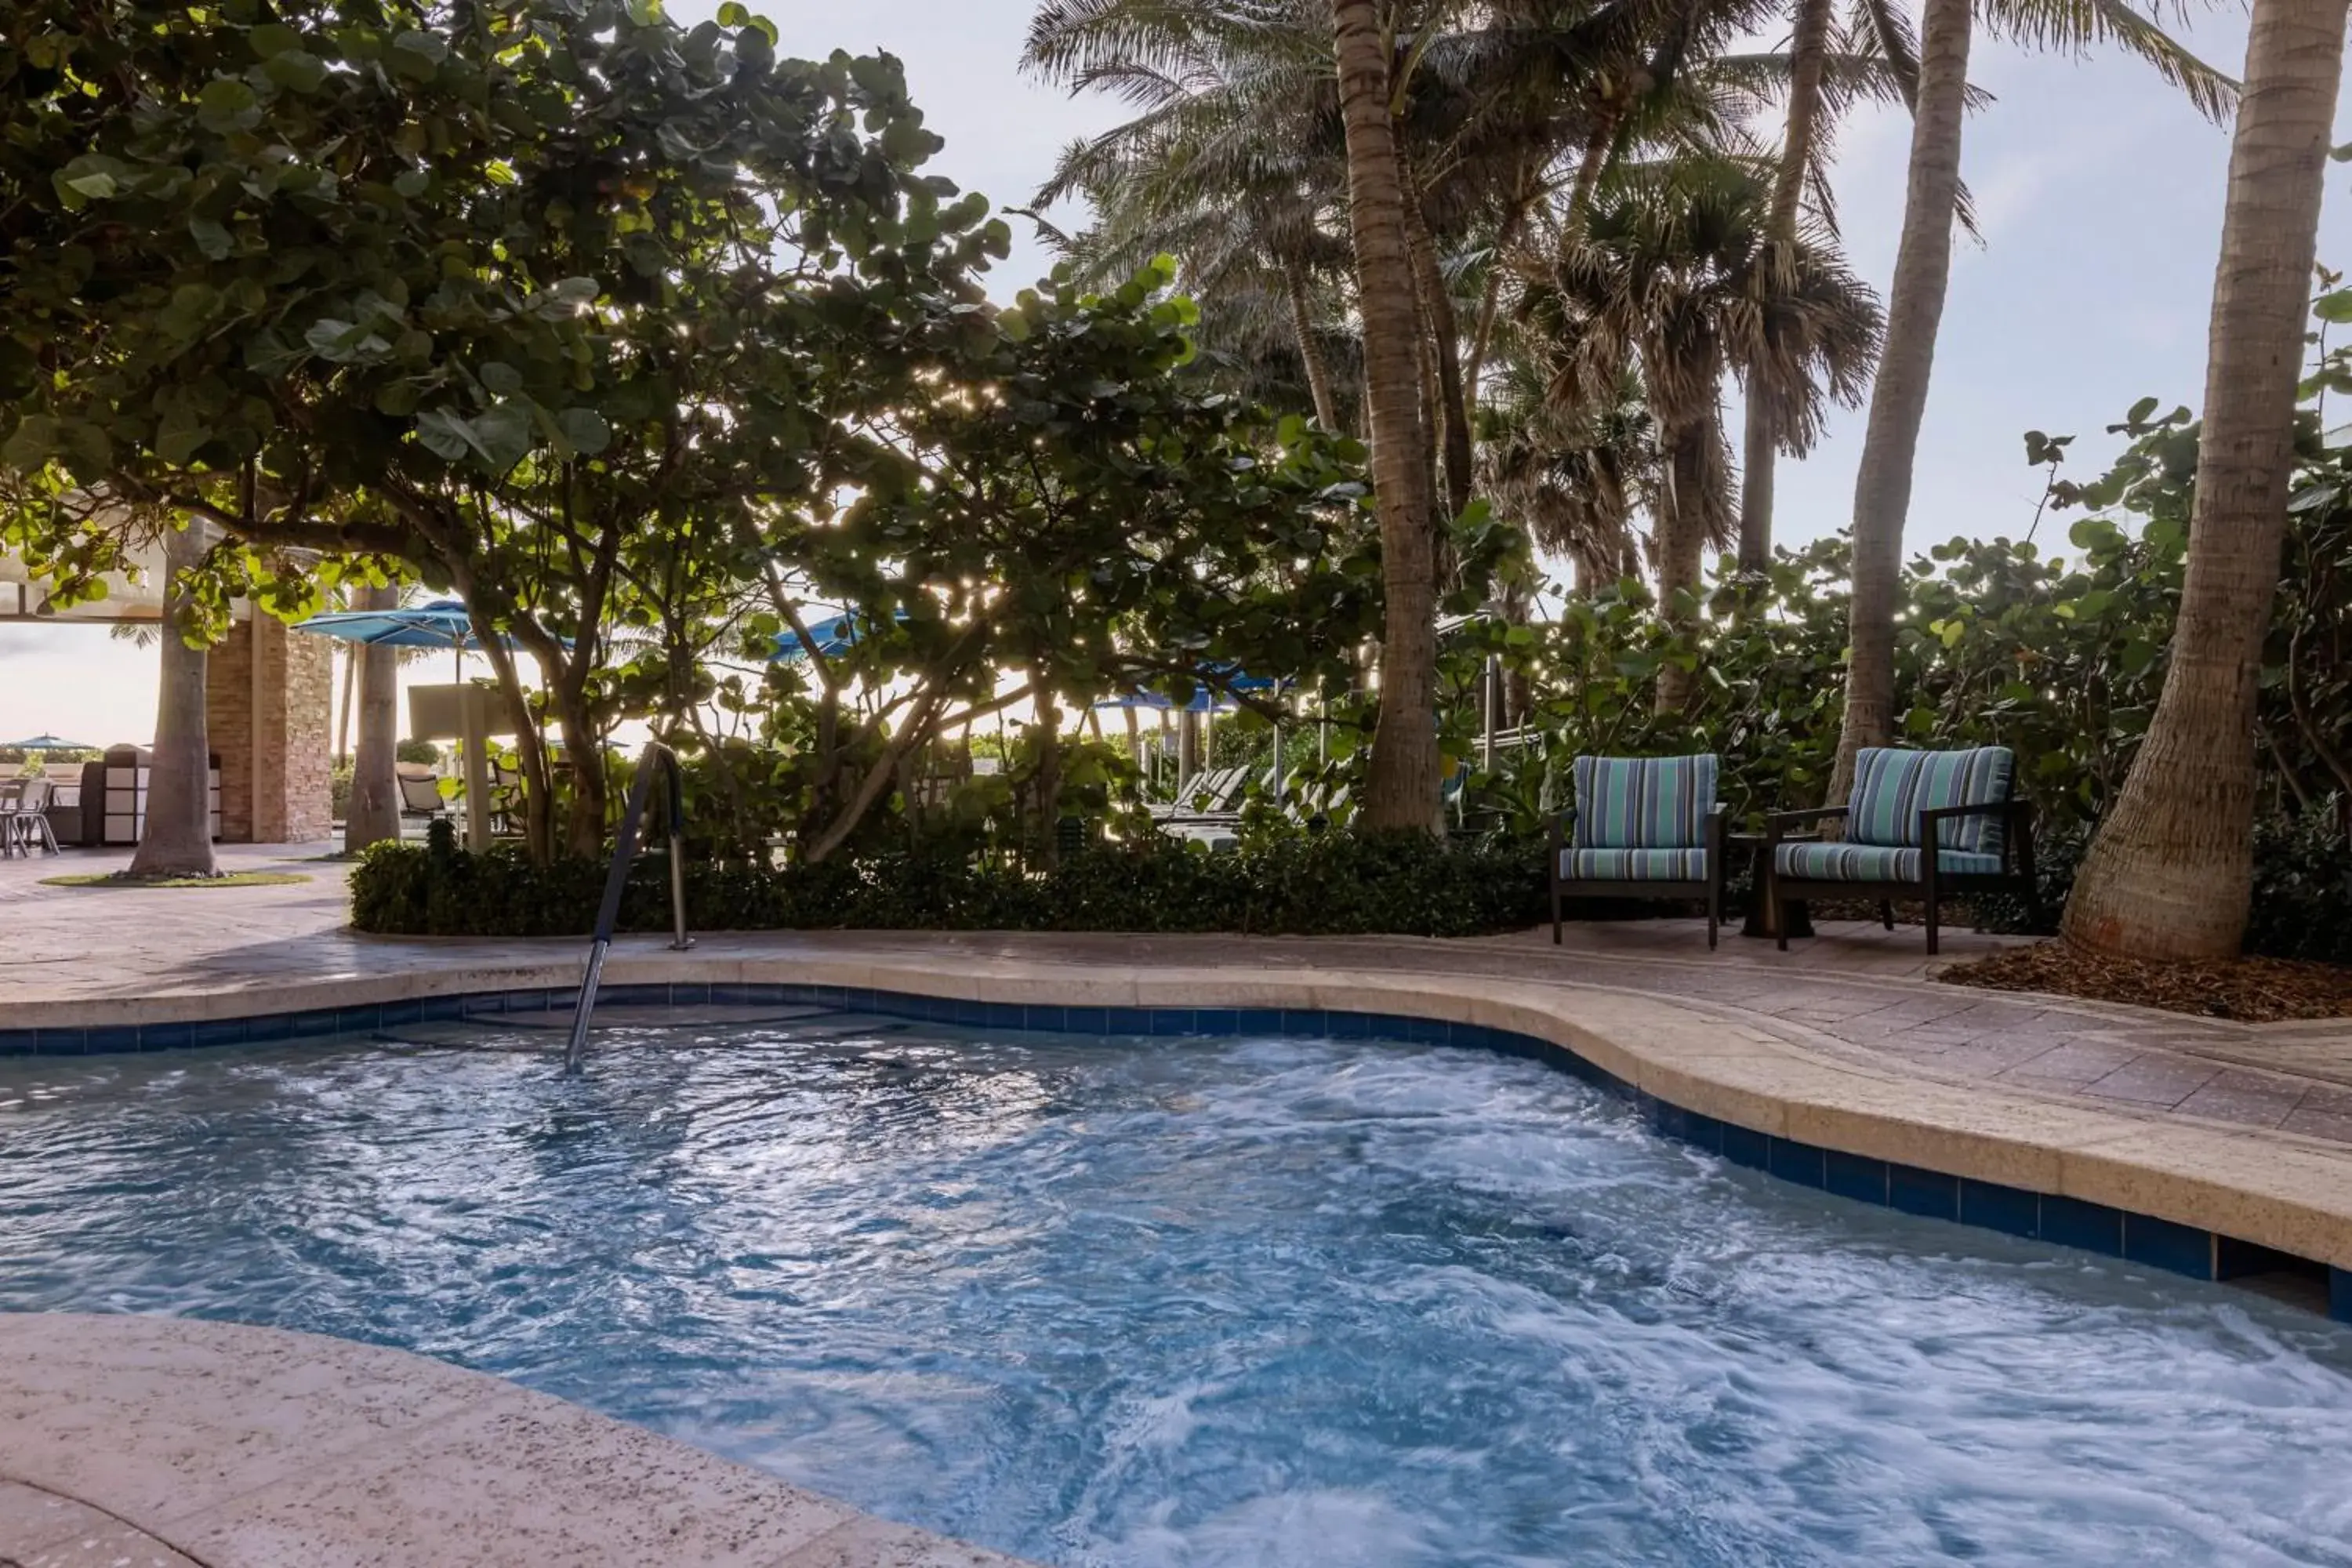 Swimming Pool in Marriott's Oceana Palms